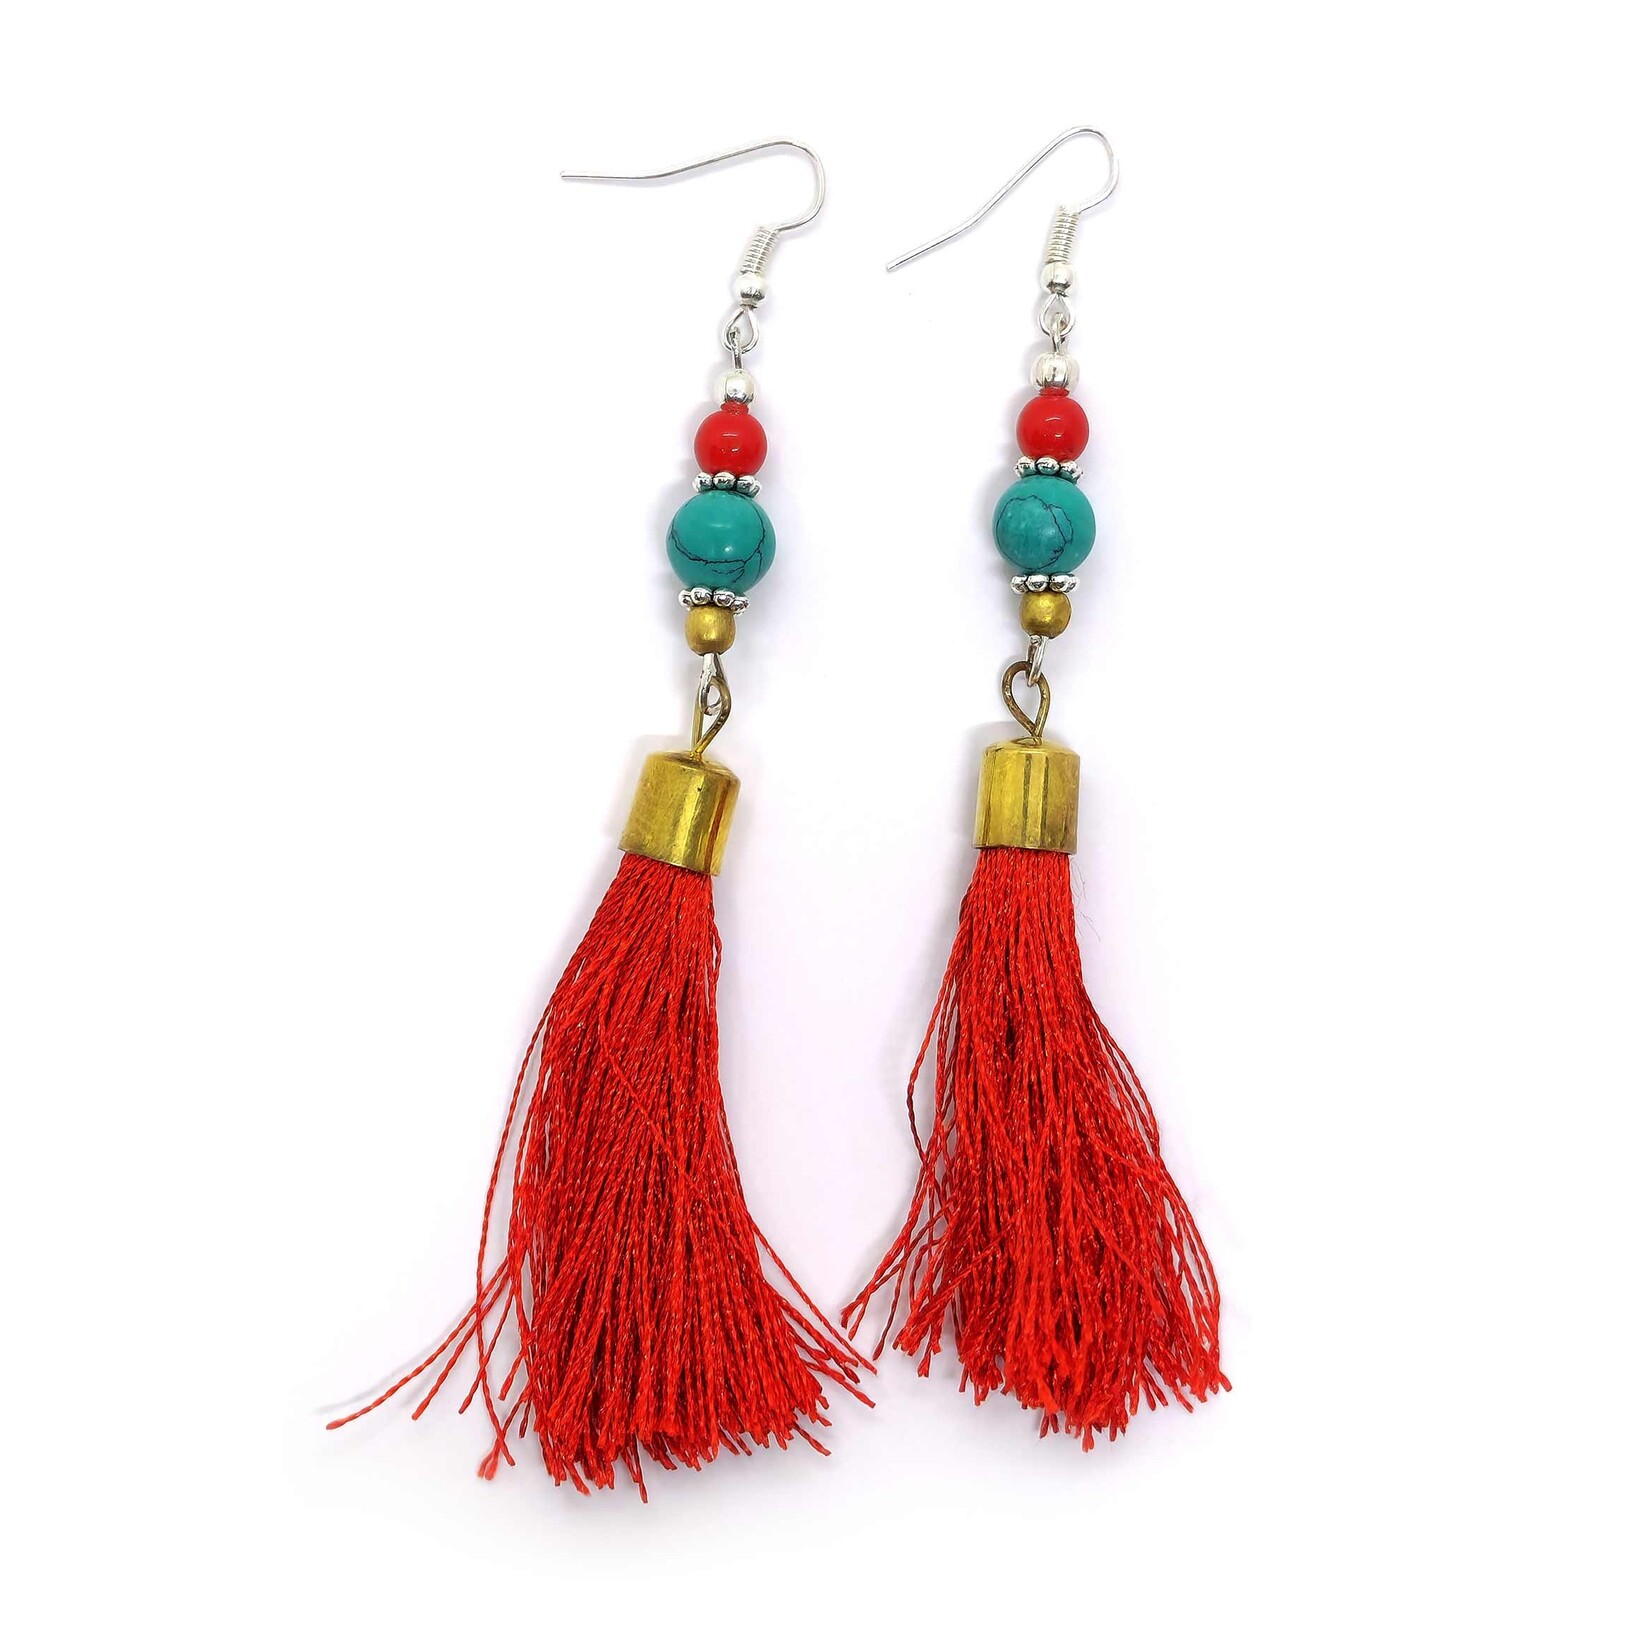 Handmade Tibetan Earrings Turquoise, Coral, and Silk Tassel